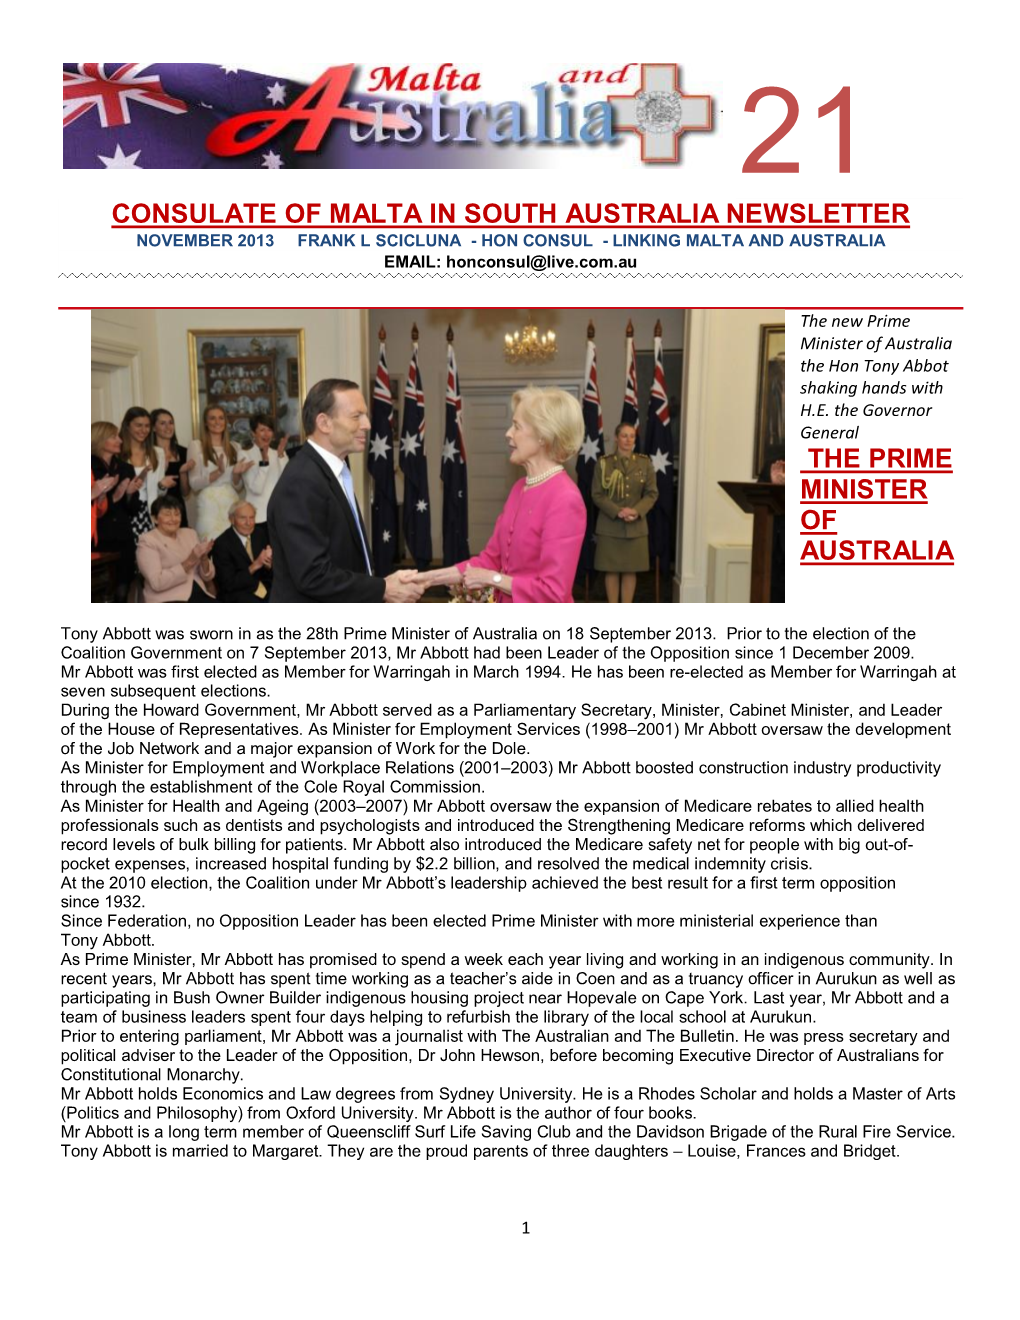 Consulate of Malta in South Australia Newsletter the Prime Minister of Australia